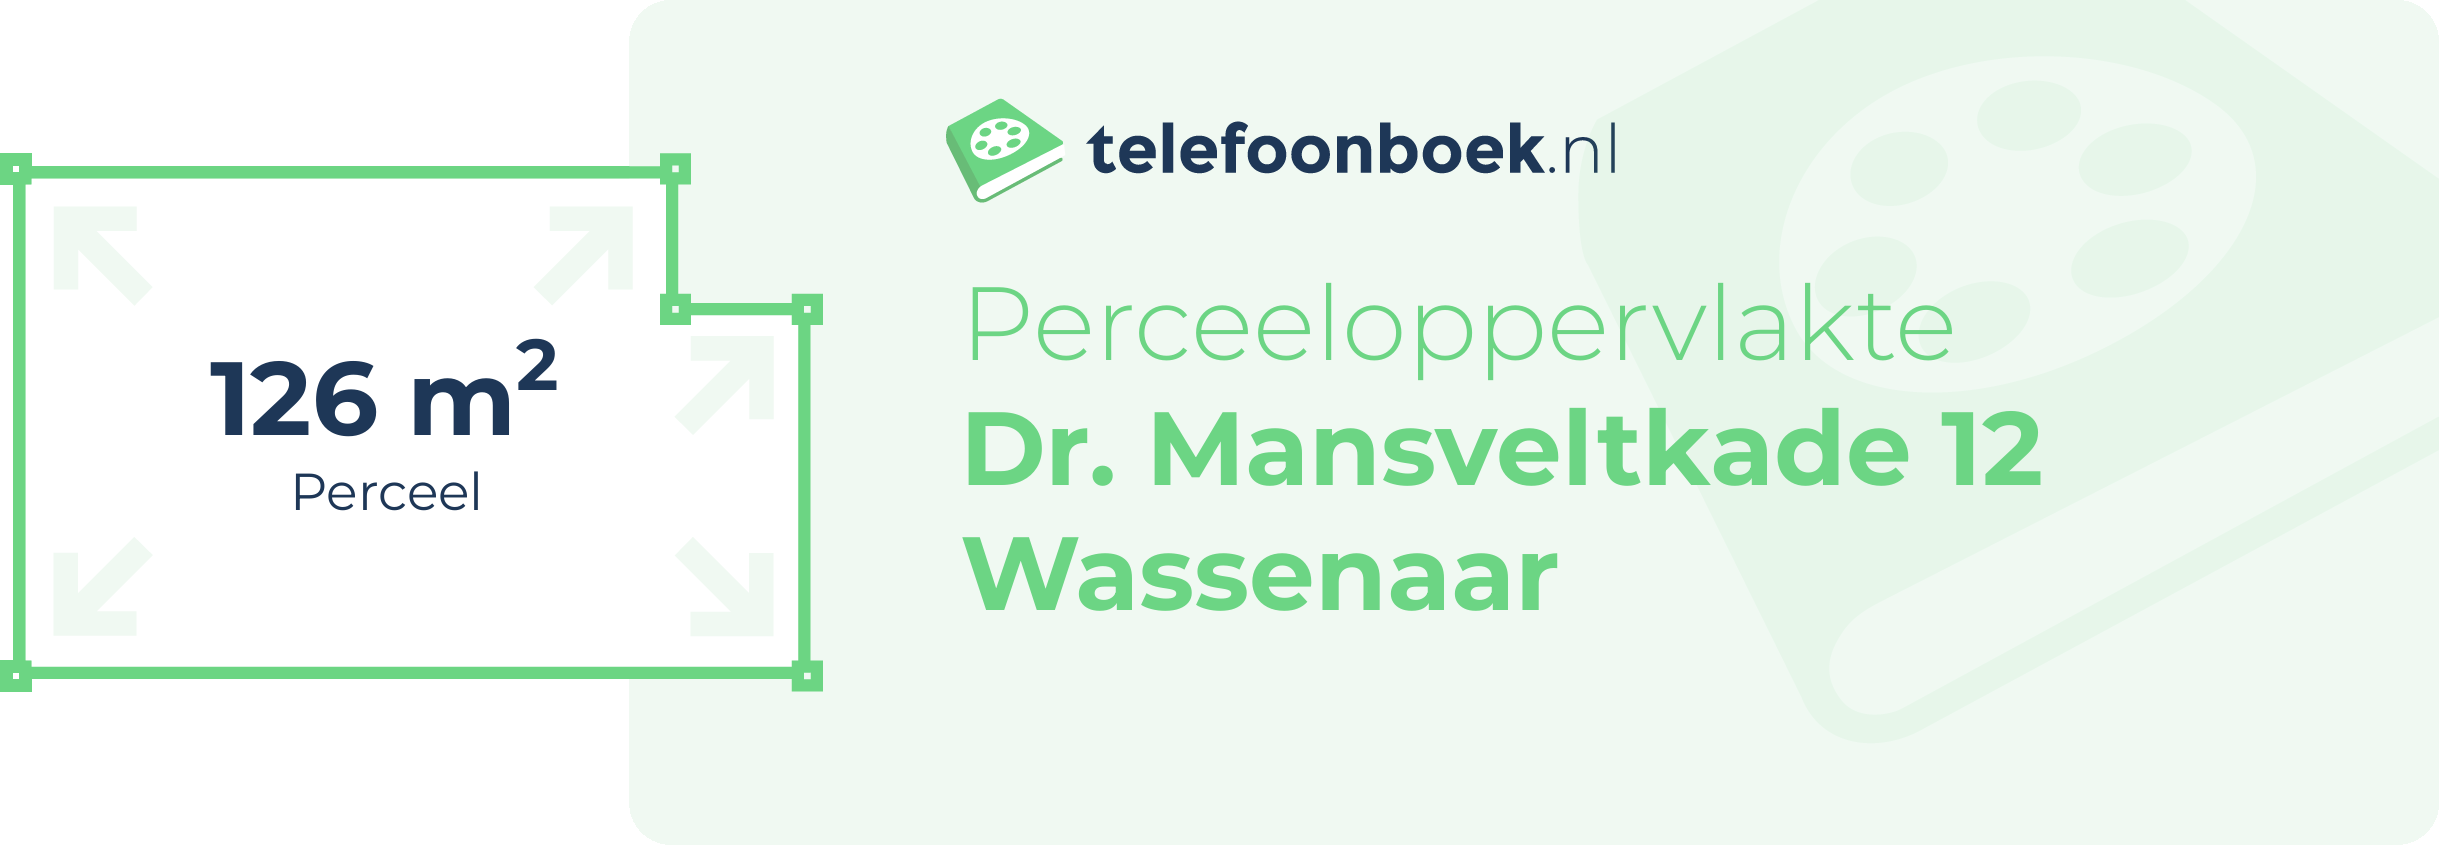 Perceeloppervlakte Dr. Mansveltkade 12 Wassenaar